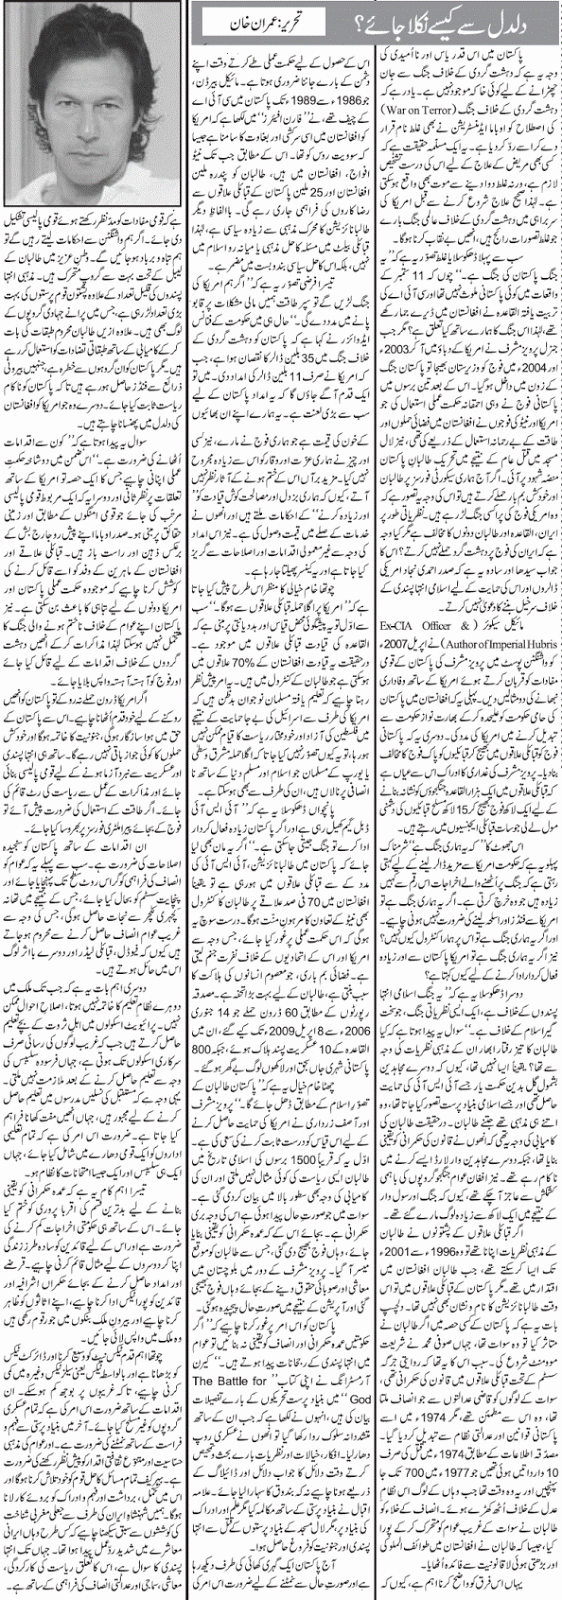 imran-khan-article-about-terrorism-in-pakistan.gif